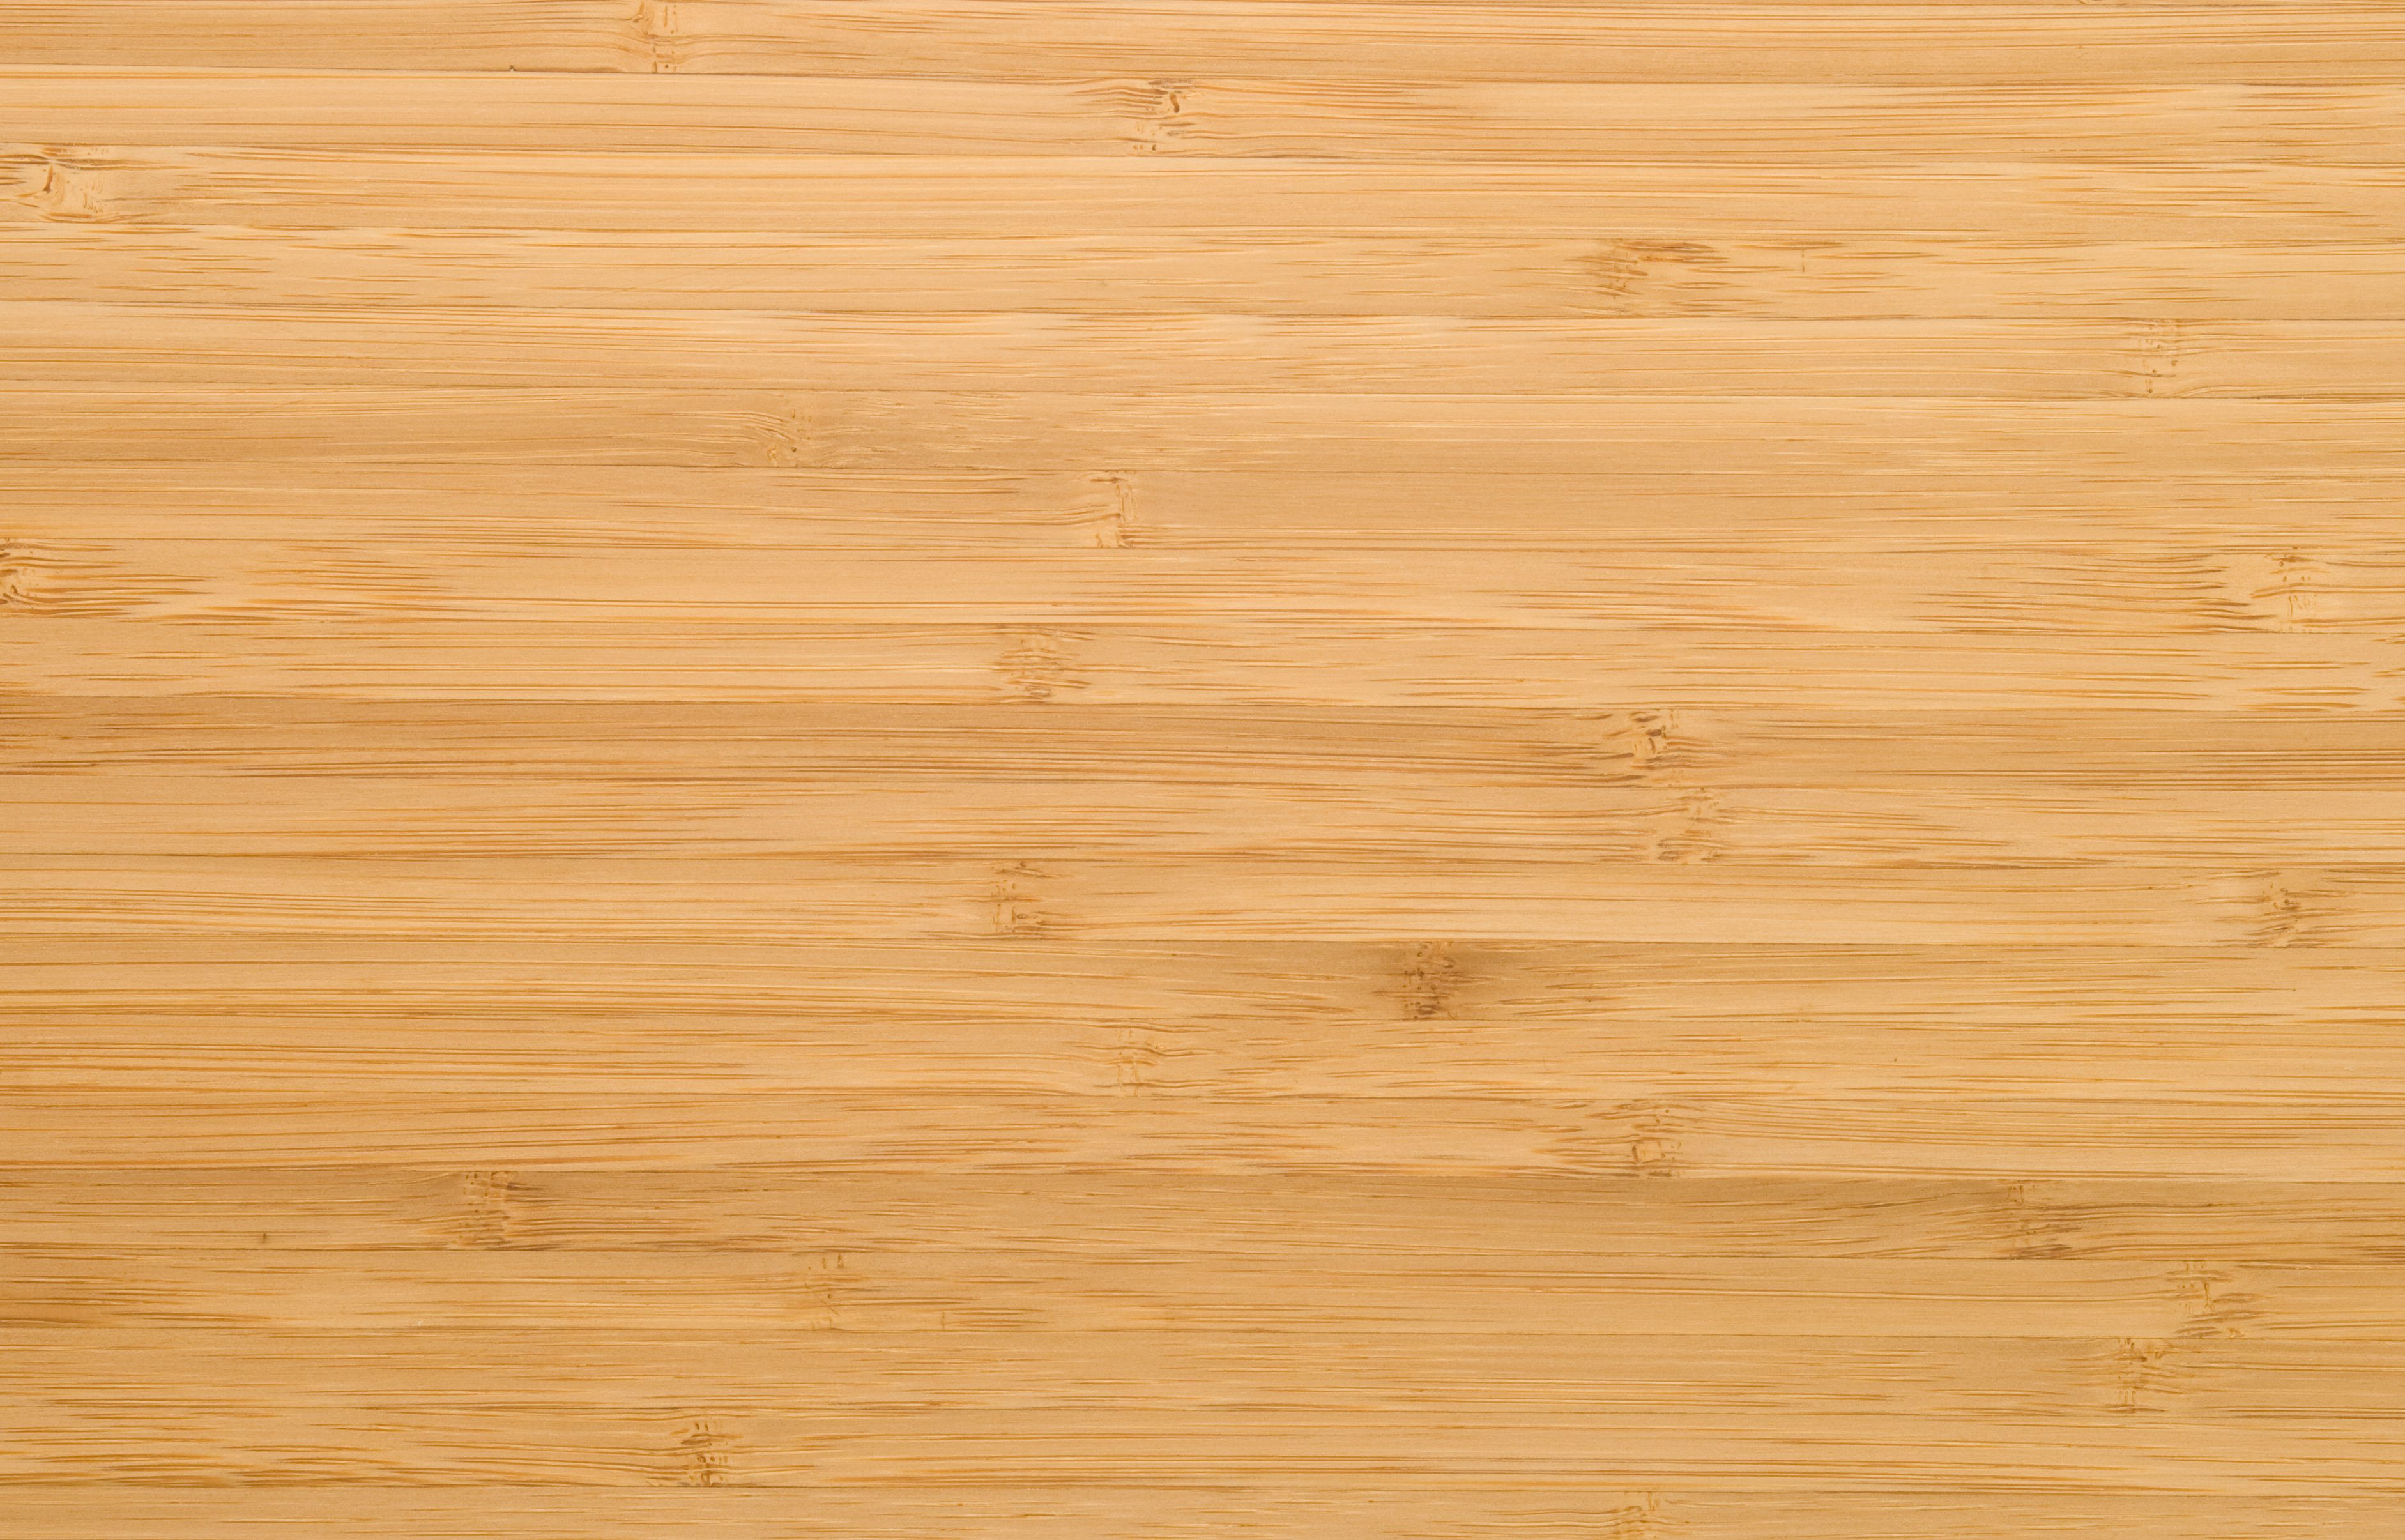 25 Elegant Hardwood Floor Pet Vacuum 2024 free download hardwood floor pet vacuum of can you use a wet mop on bamboo floors inside natural bamboo plank 94259870 59aeefd4519de20010d5c648